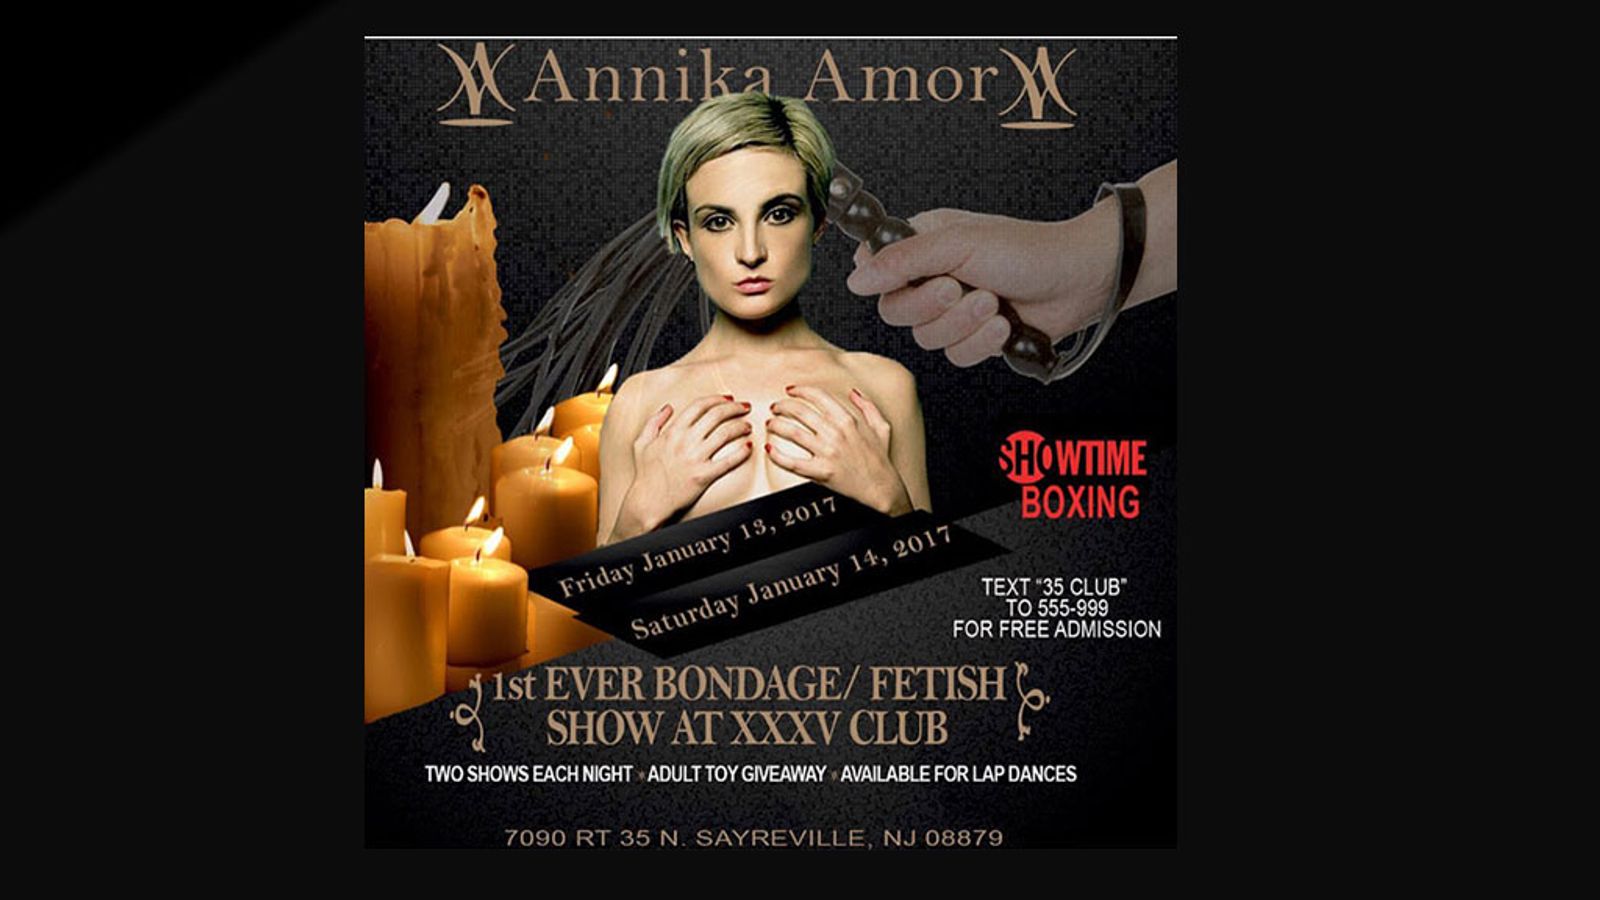 Former XXX Star Annika Amour Headlines at Club XXXV Gentlemen’s Club